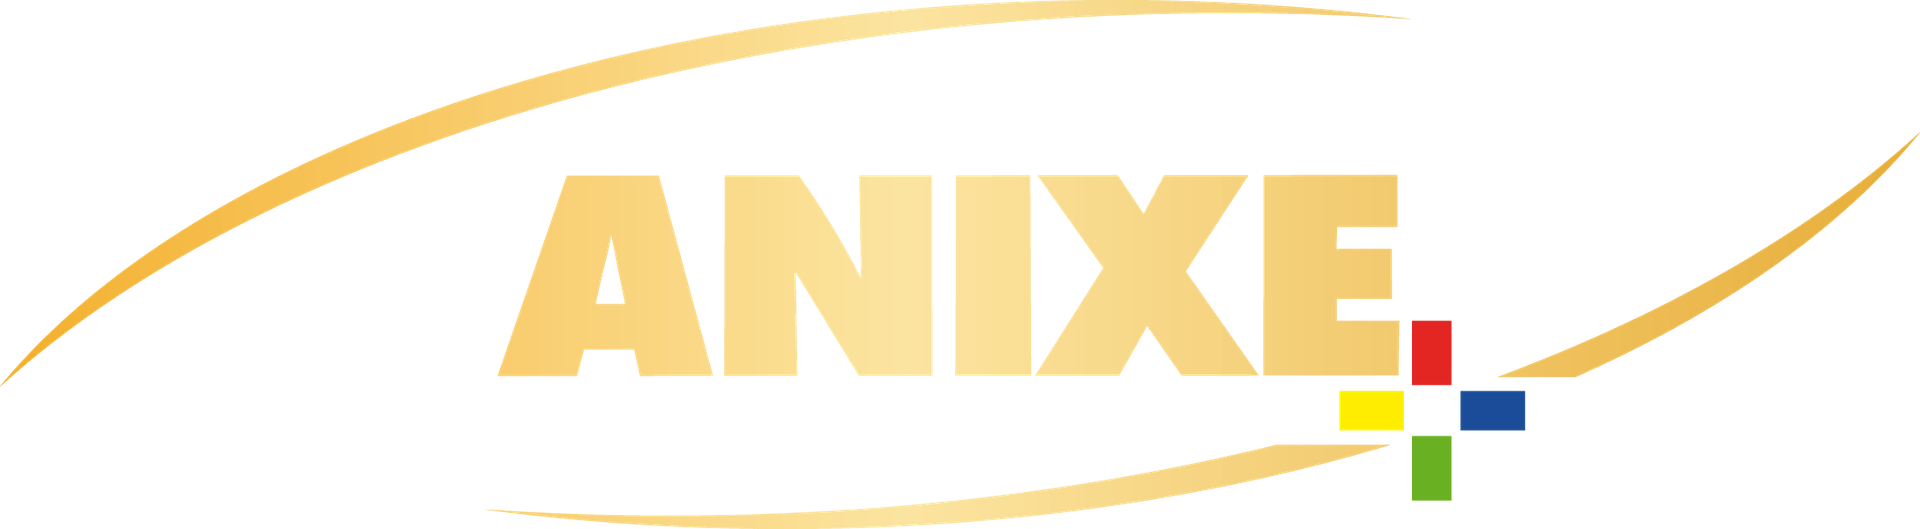 ANIXE + Logo.png